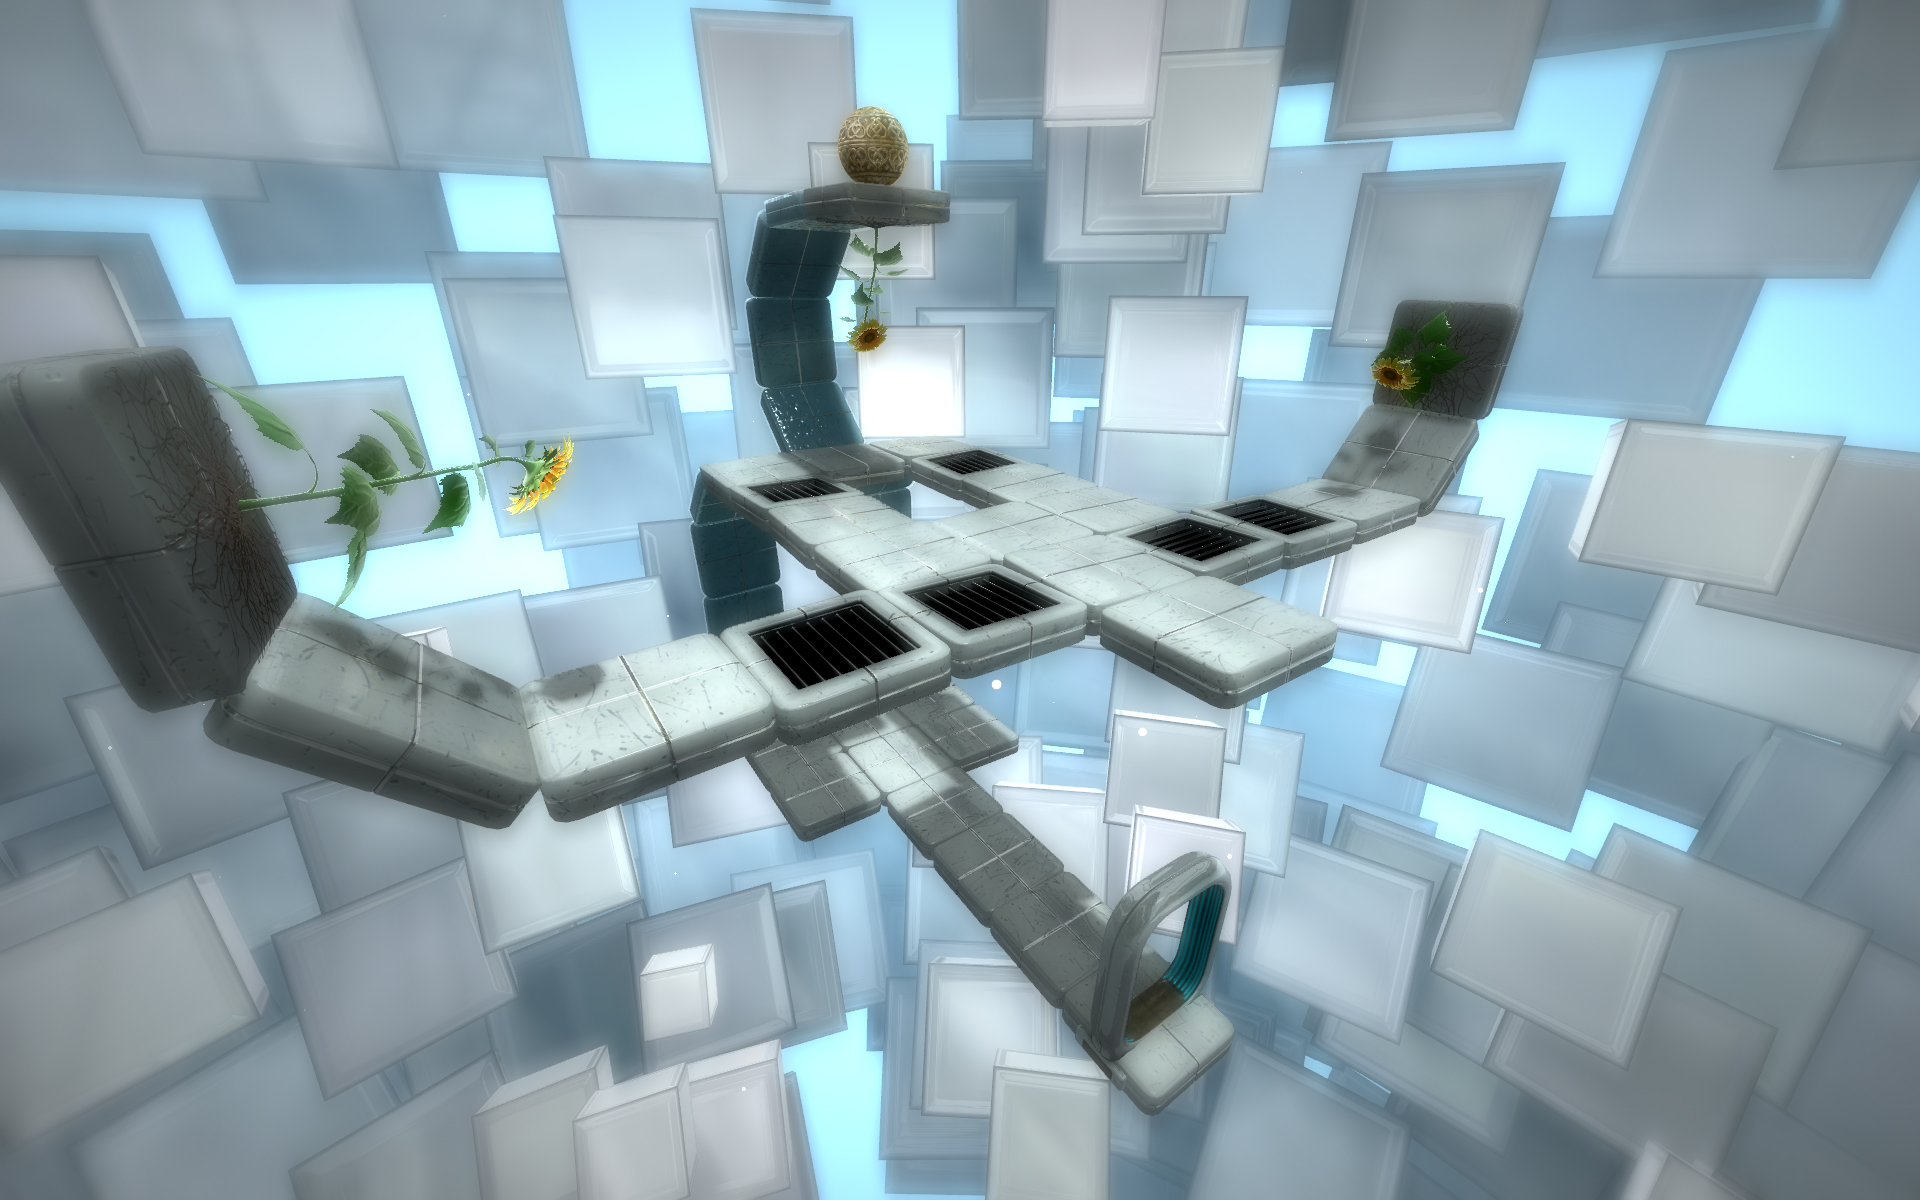 Puzzle Dimension screenshot